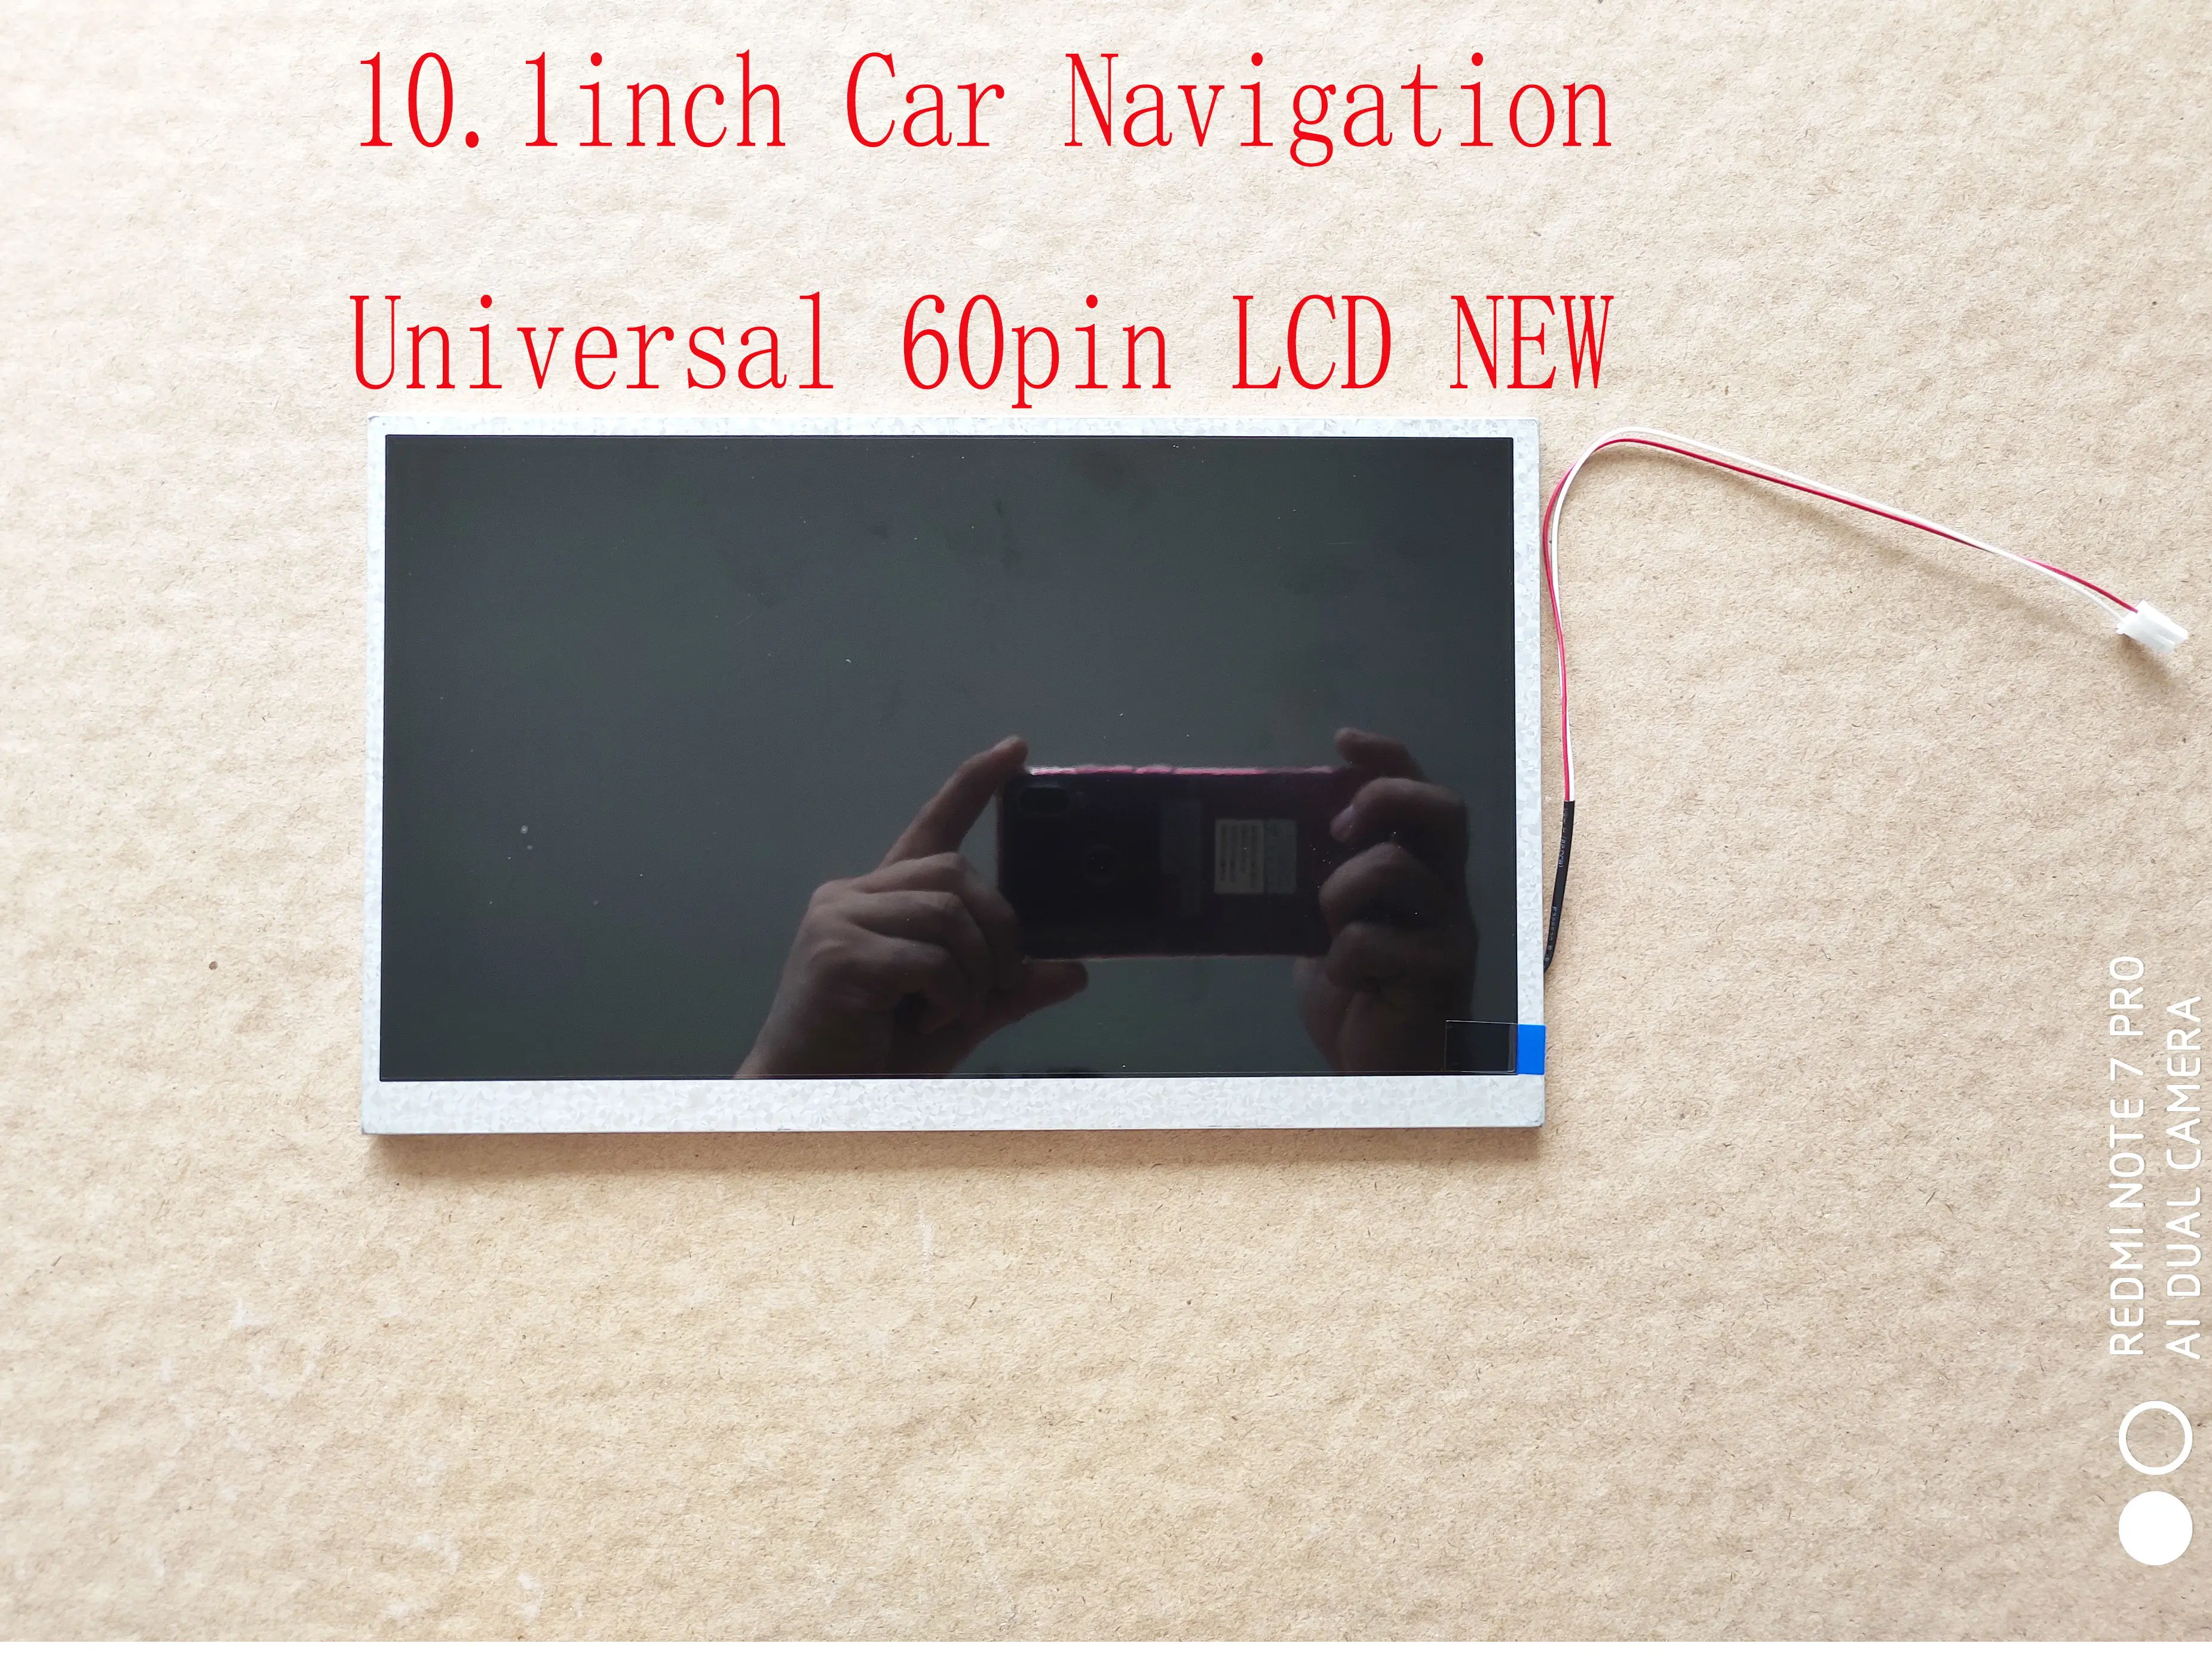 9inch/'10.1inch/10.2inch 60pin Universal 1024*600 Car Navigation LCD NEW 9inch-210*126mm 10.1inch 235*143mm